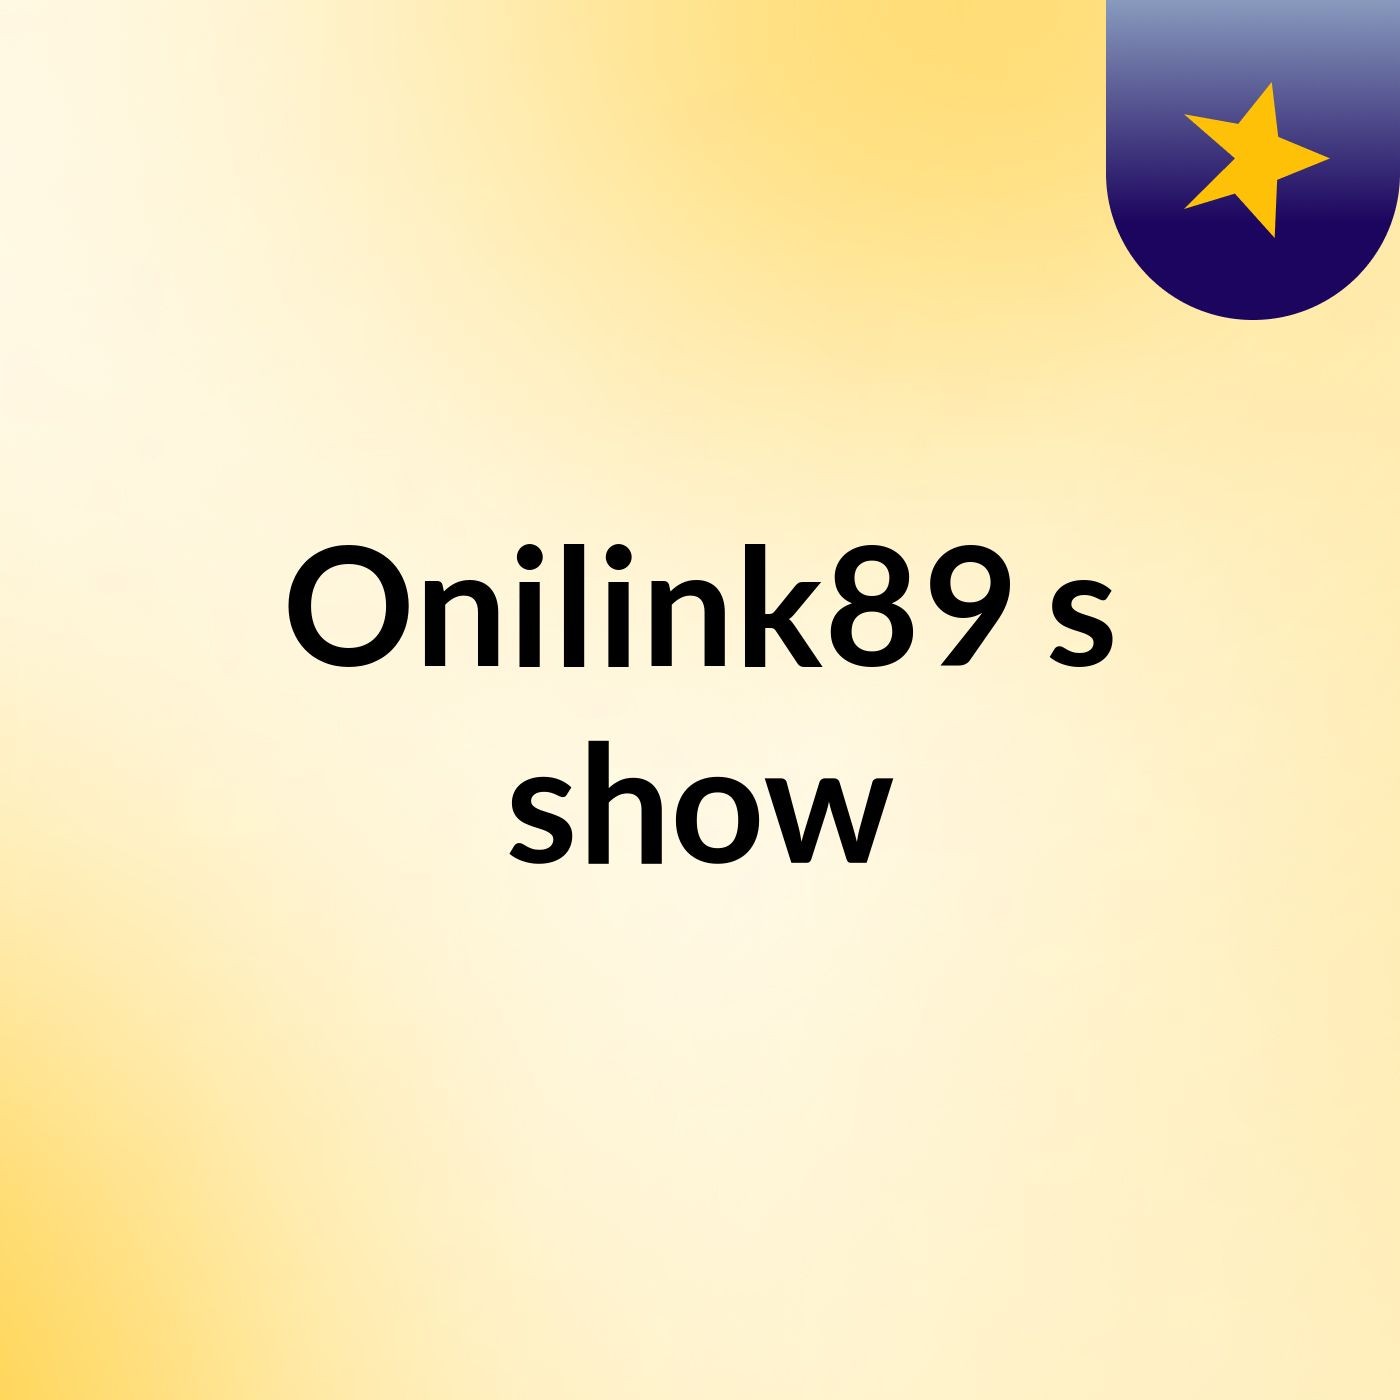 Onilink89's show